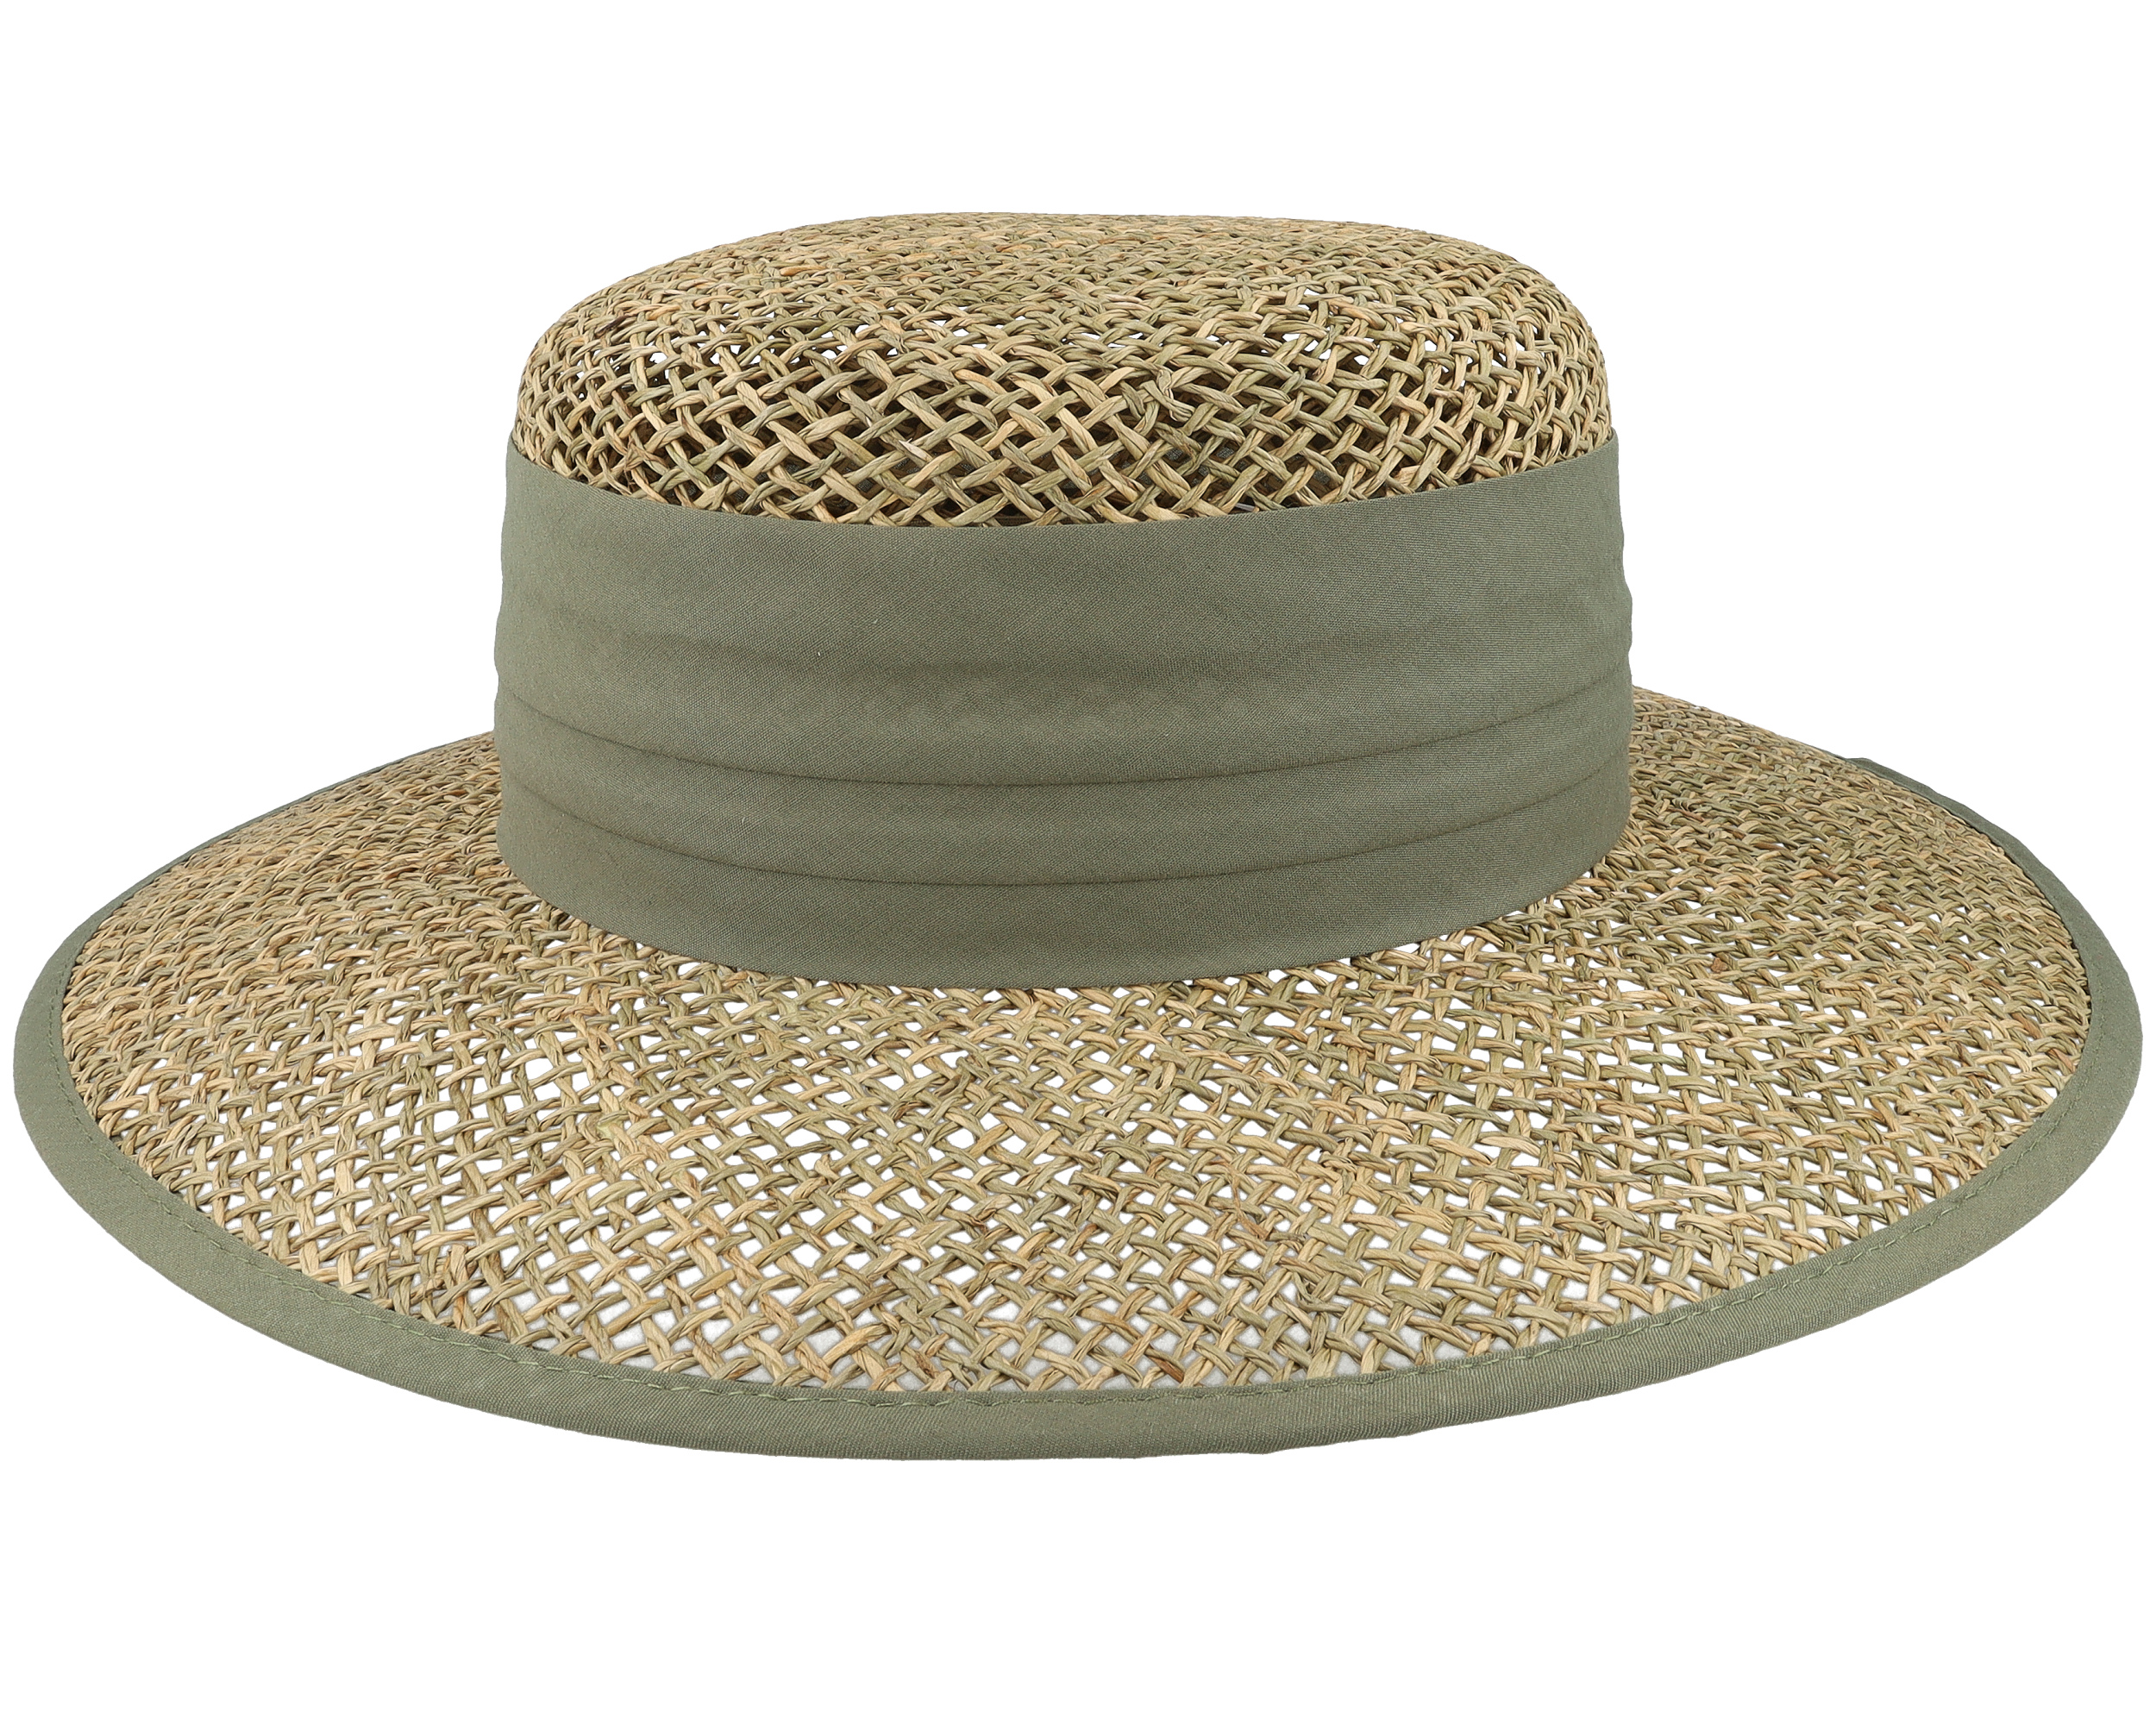 Seagras - Straw Seeberger Cloche Hut Natural/Khaki Hat